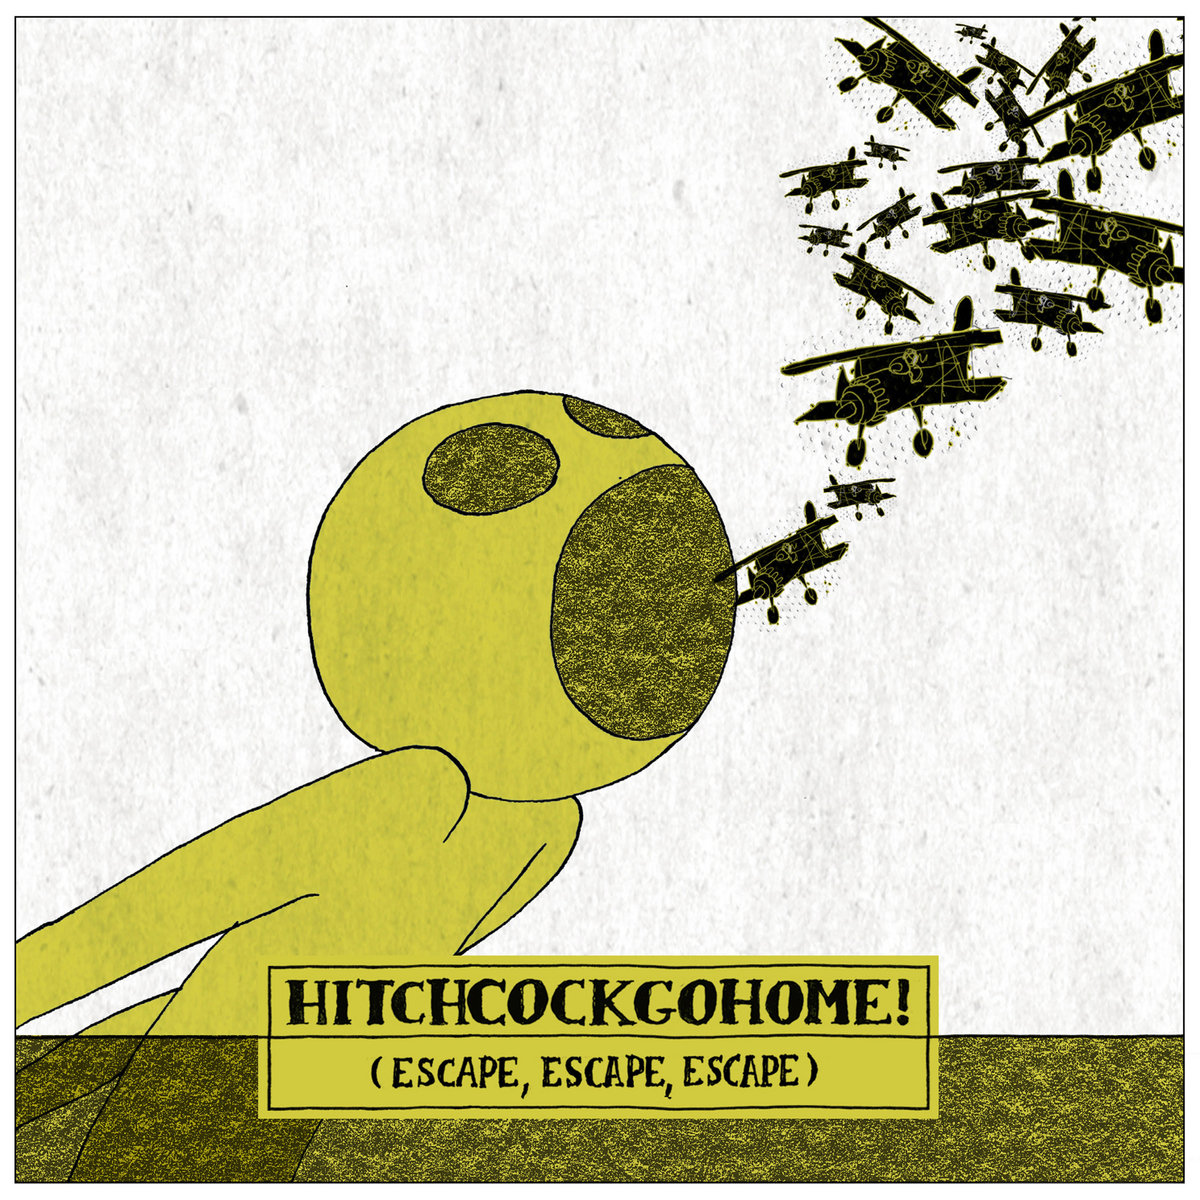 HitchcockGoHome! (escape, escape, escape)